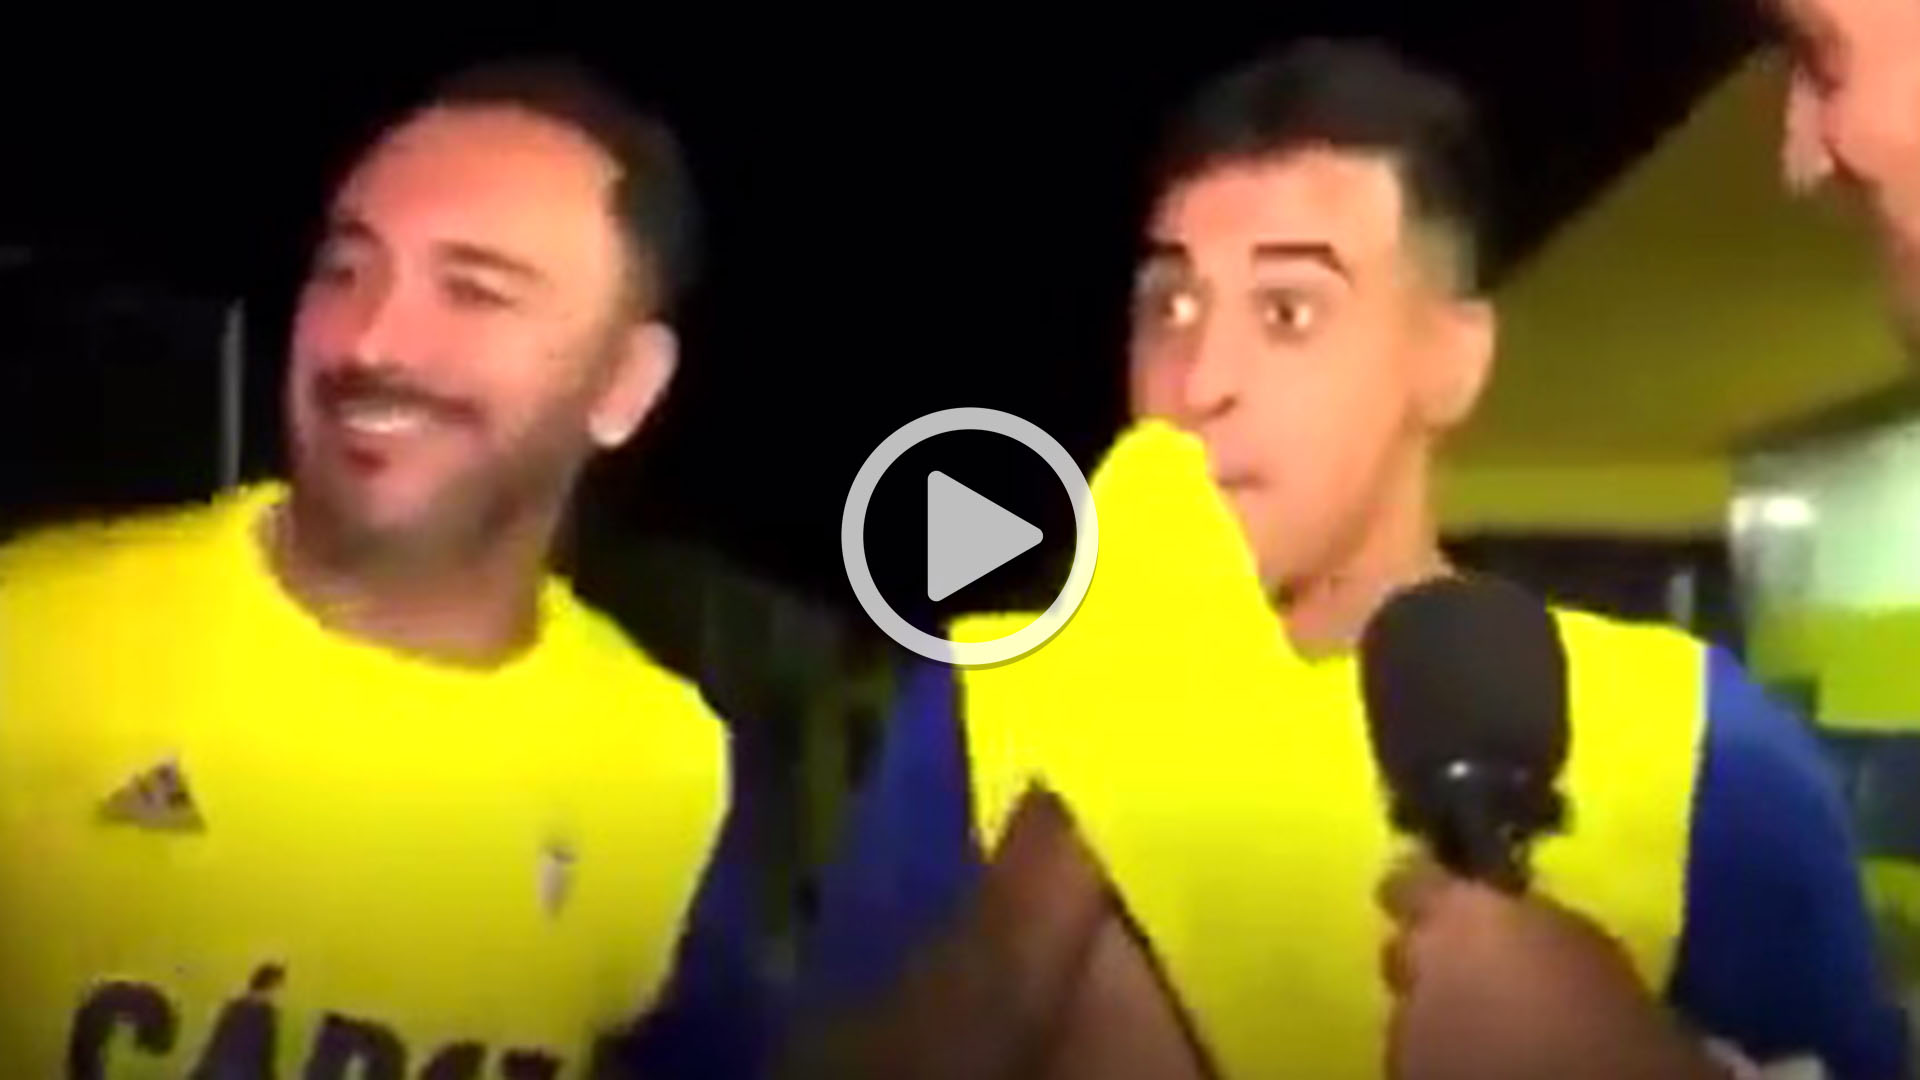 Dos jugadores del Melilla celebran un gol simulando esnifar cocaína